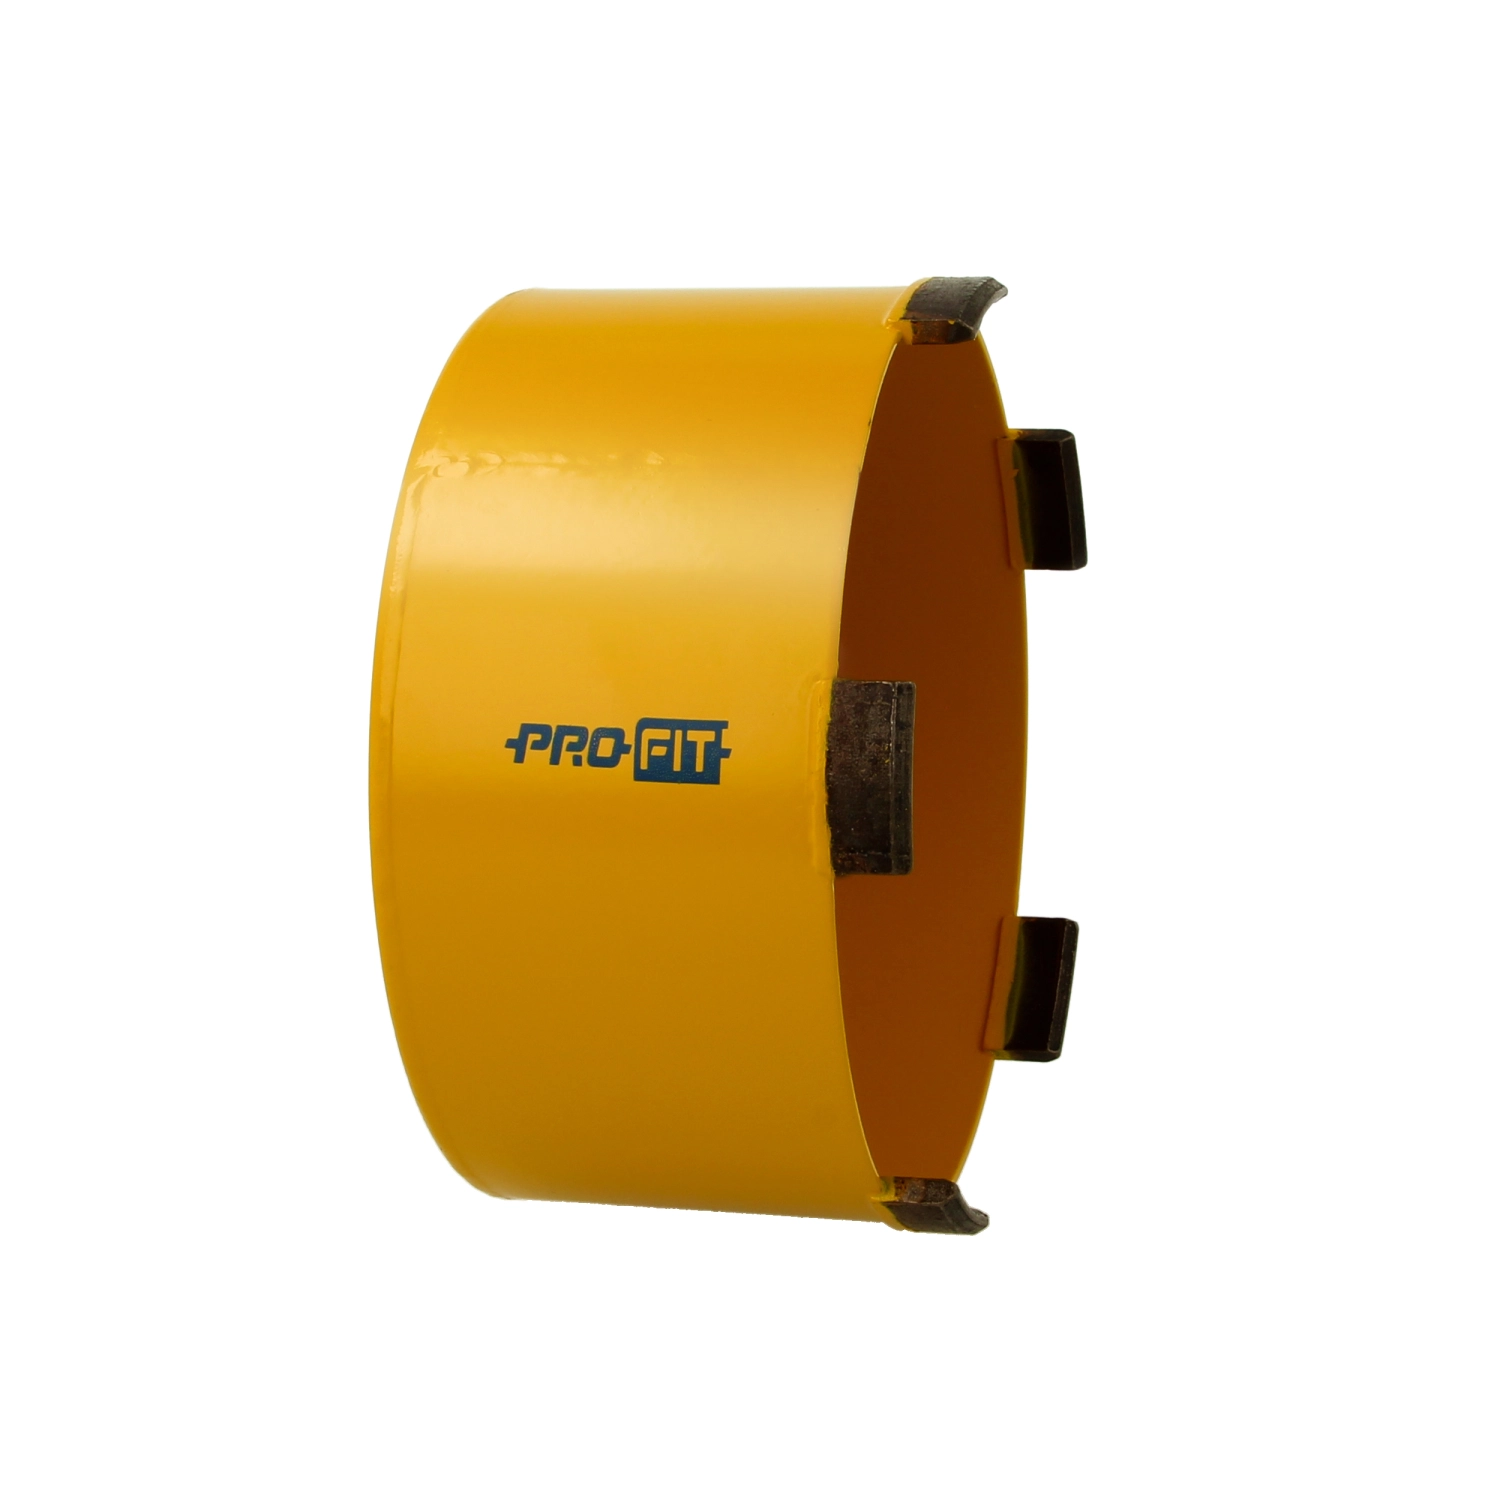 ProFit 09131133 Concrete Light Dry gatzaag met geintegreerde C&D Adapter 133 mm-image